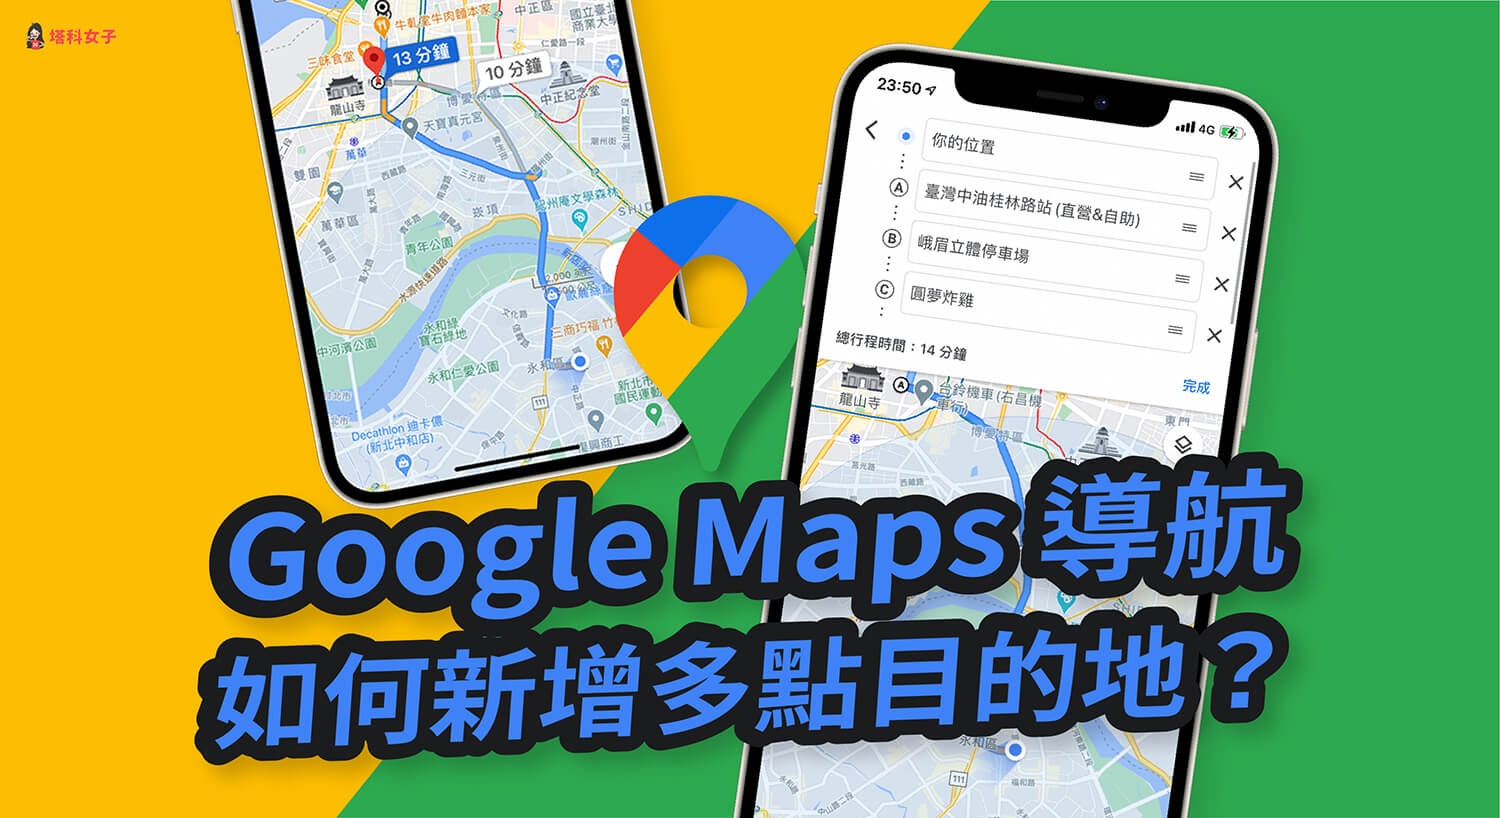 Google Maps 路線規劃如何新增多點目的地？教你設定多個停靠站